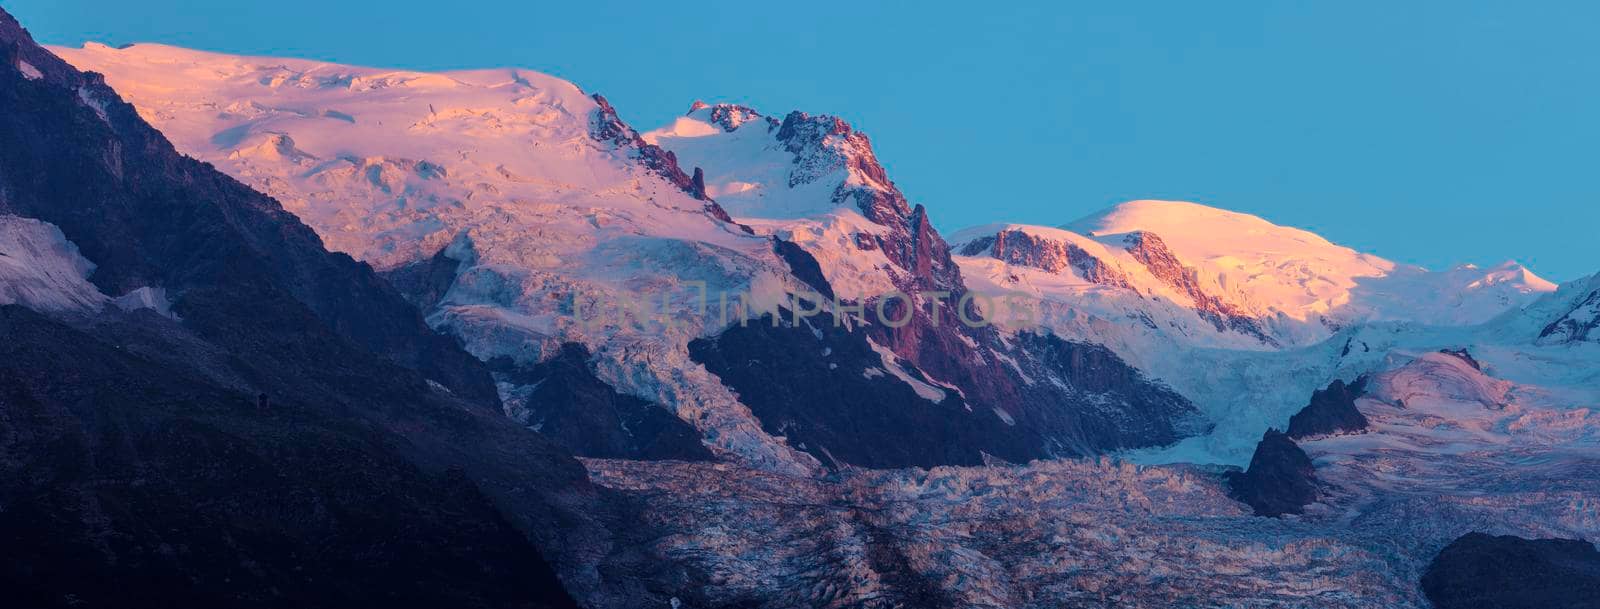 Mt. Blanc seen from Chamonix by benkrut